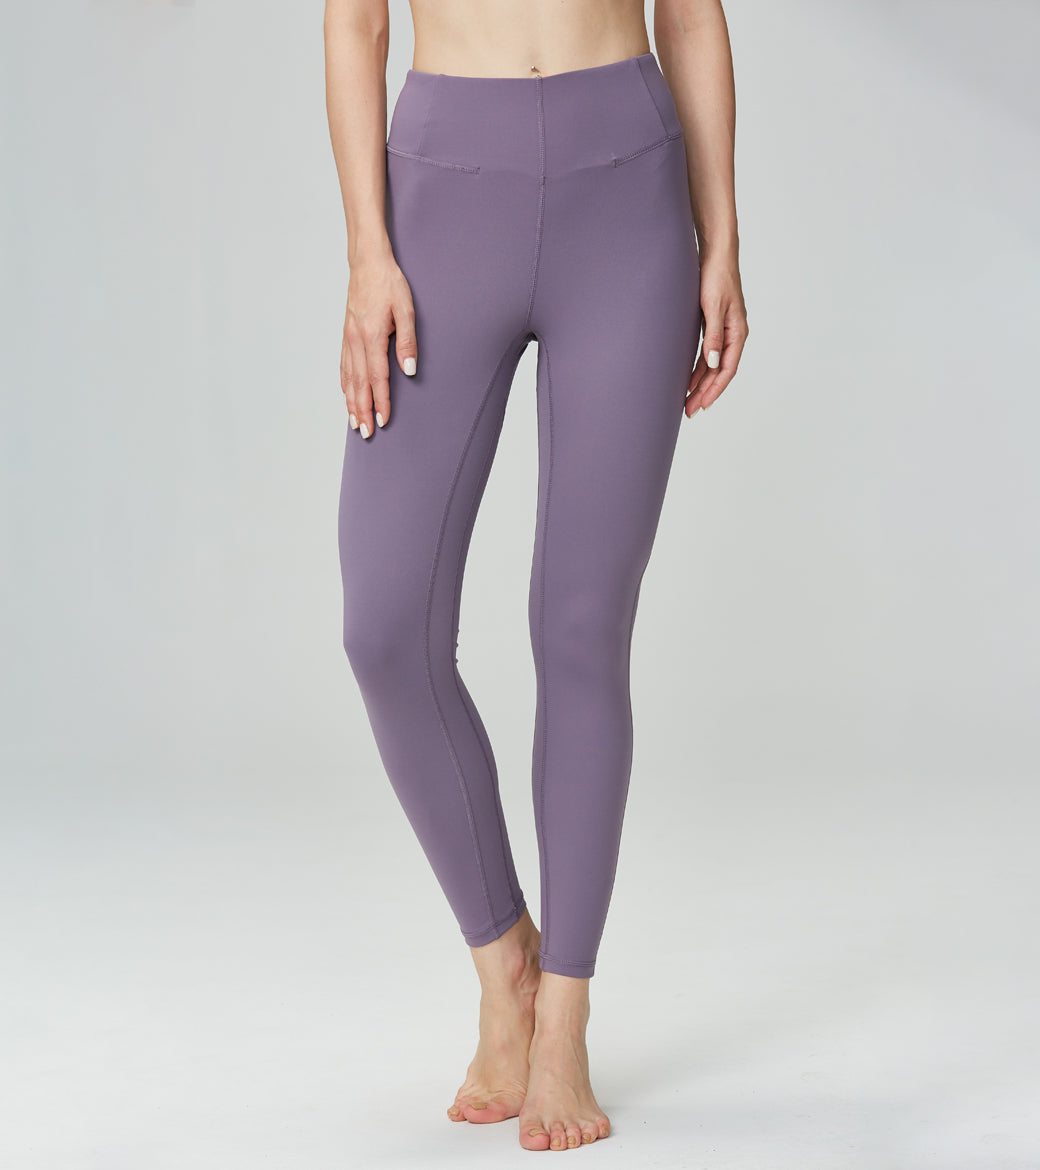 LOVESOFT Women's Purple Tight-fitting High-waist Hip-lifting Leggings